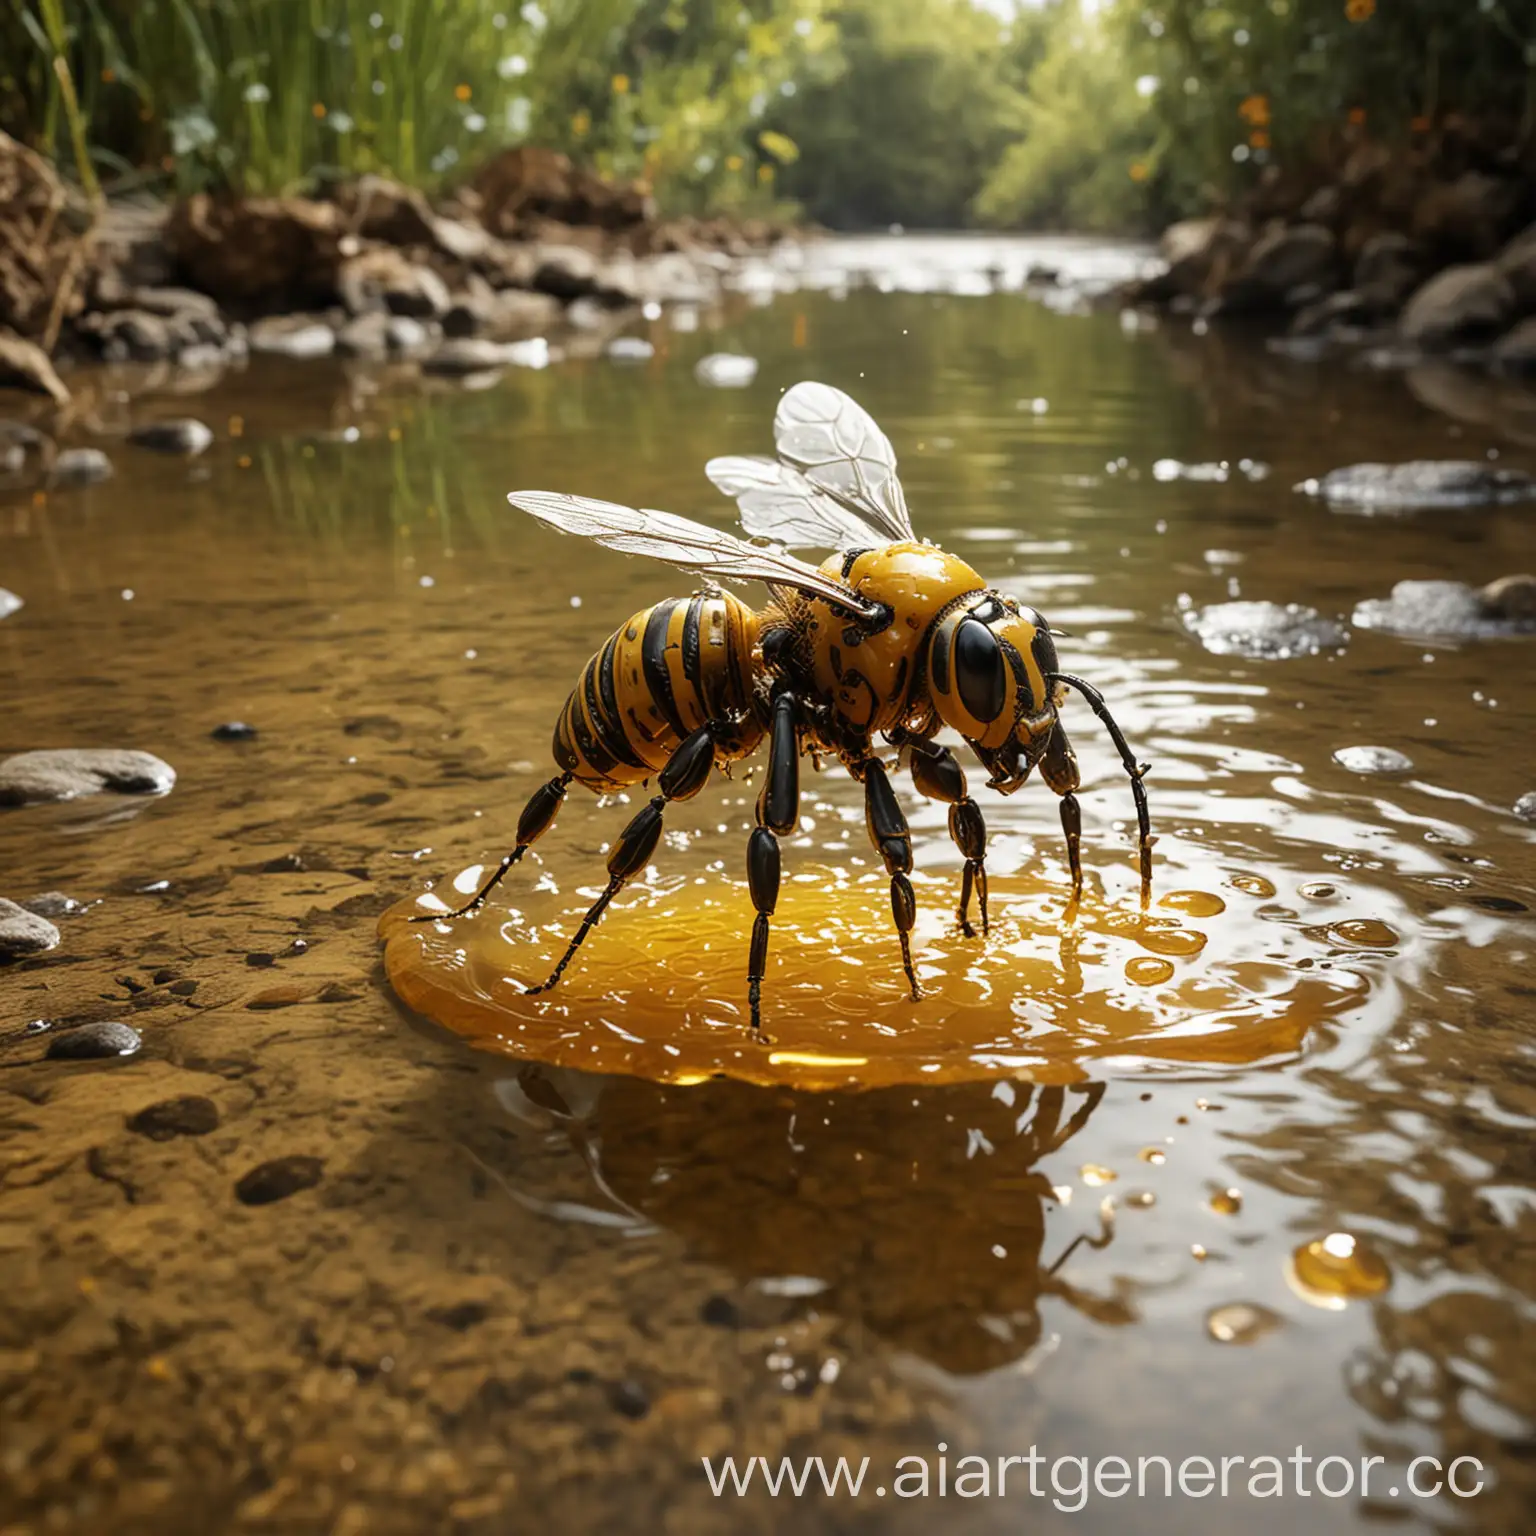 Robot-Bee-Enjoying-a-Honey-Bath-by-the-Riverside